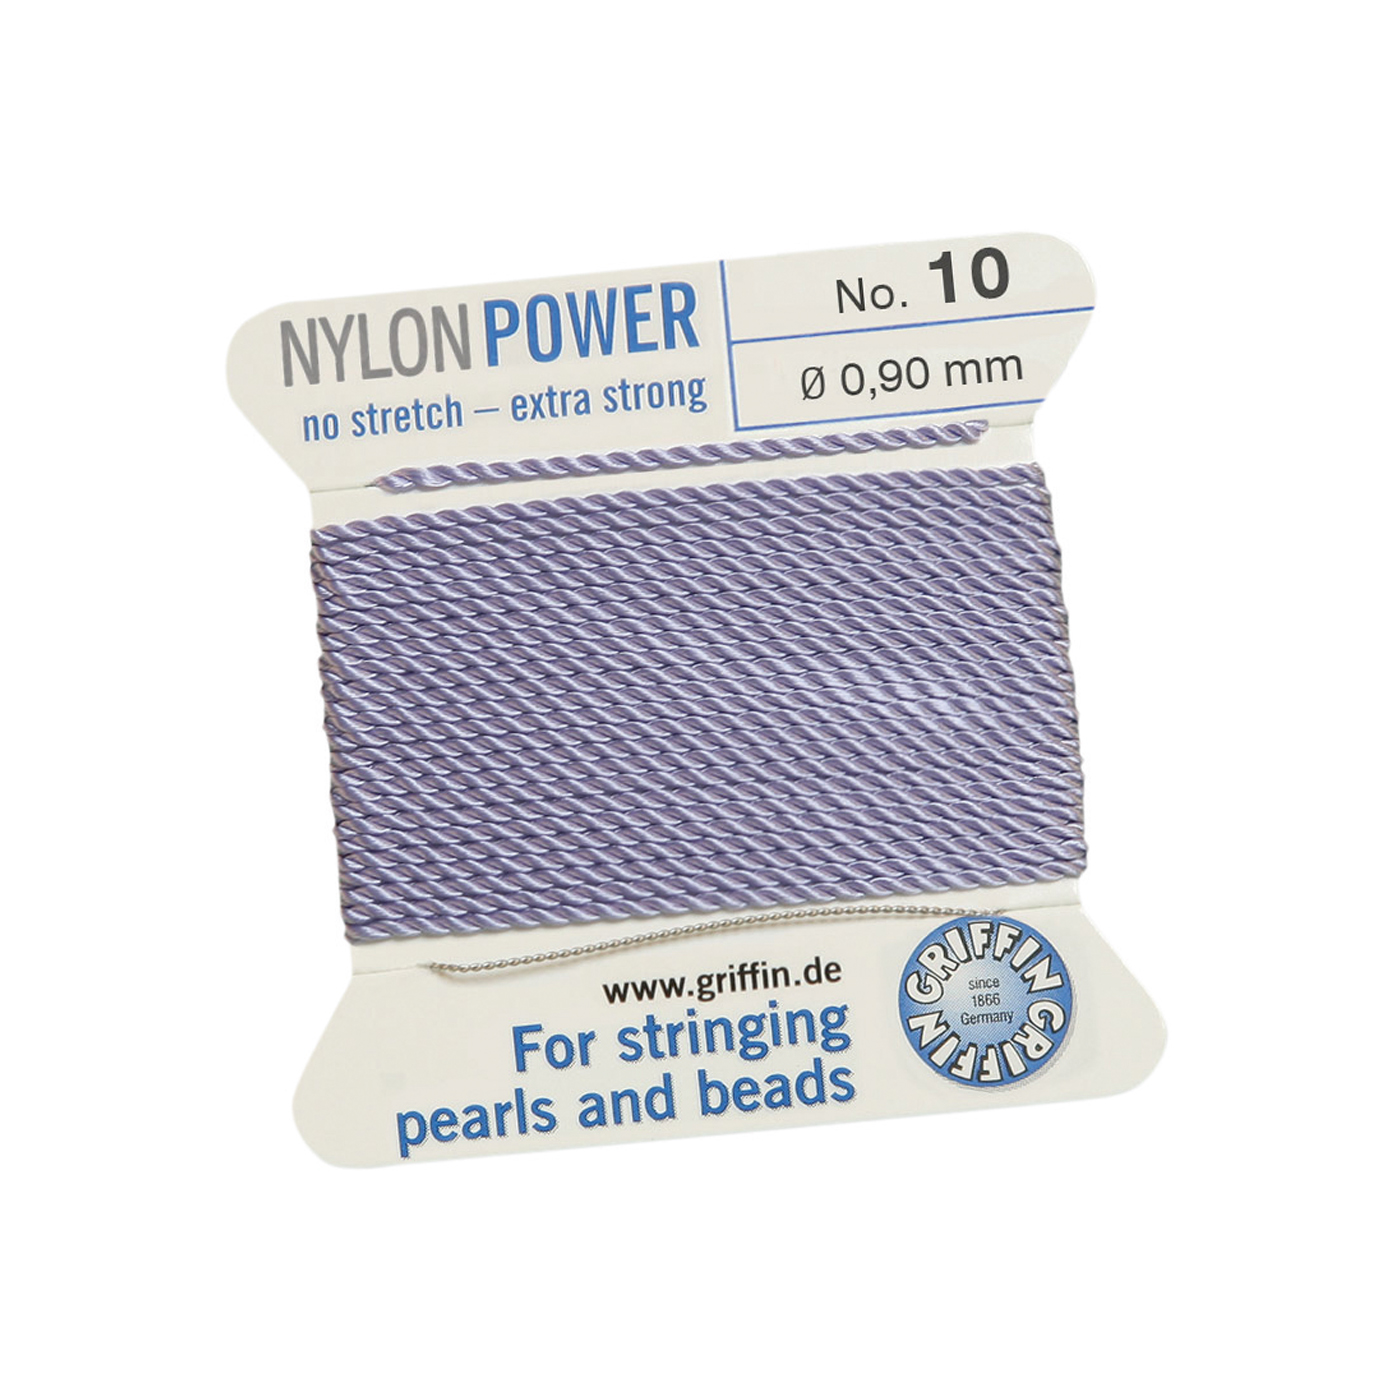 Bead Cord NylonPower, Violet, No. 10 - 2 m